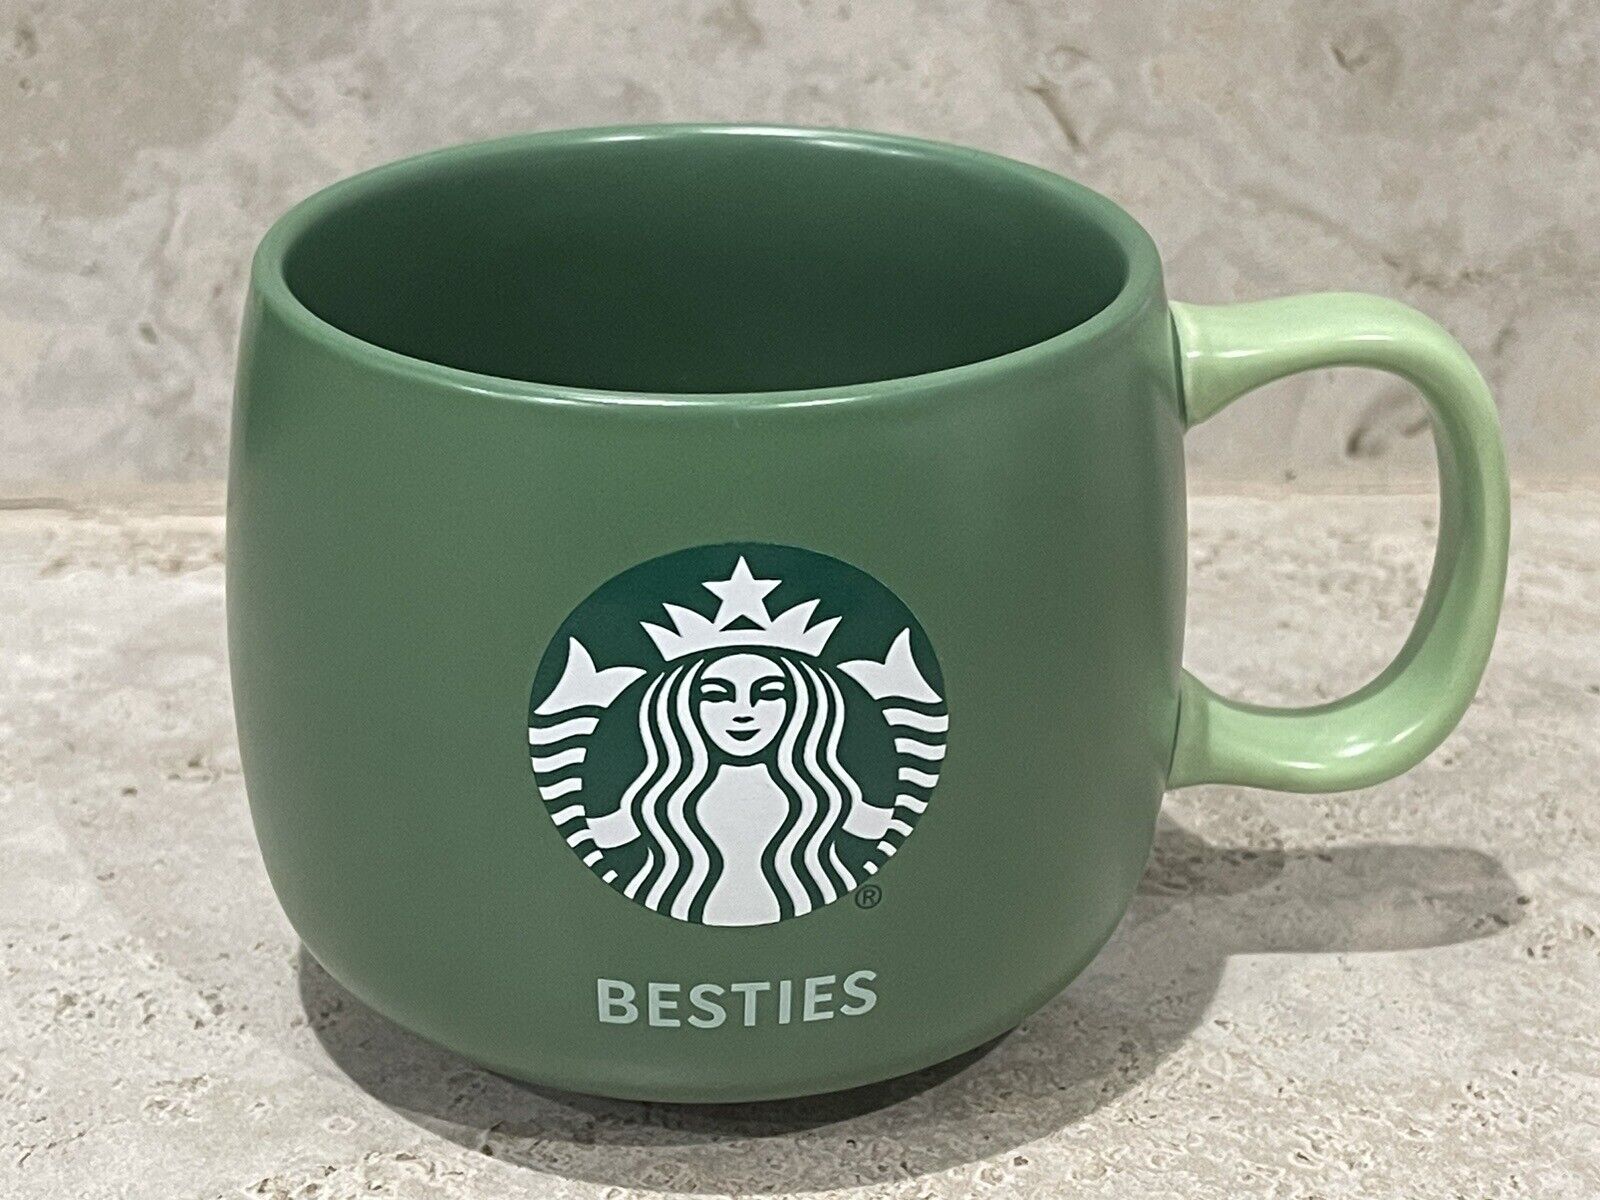 2020 Starbucks Mermaid Logo Coffee BESTIES Mug Stonewear Green 12 oz Cup